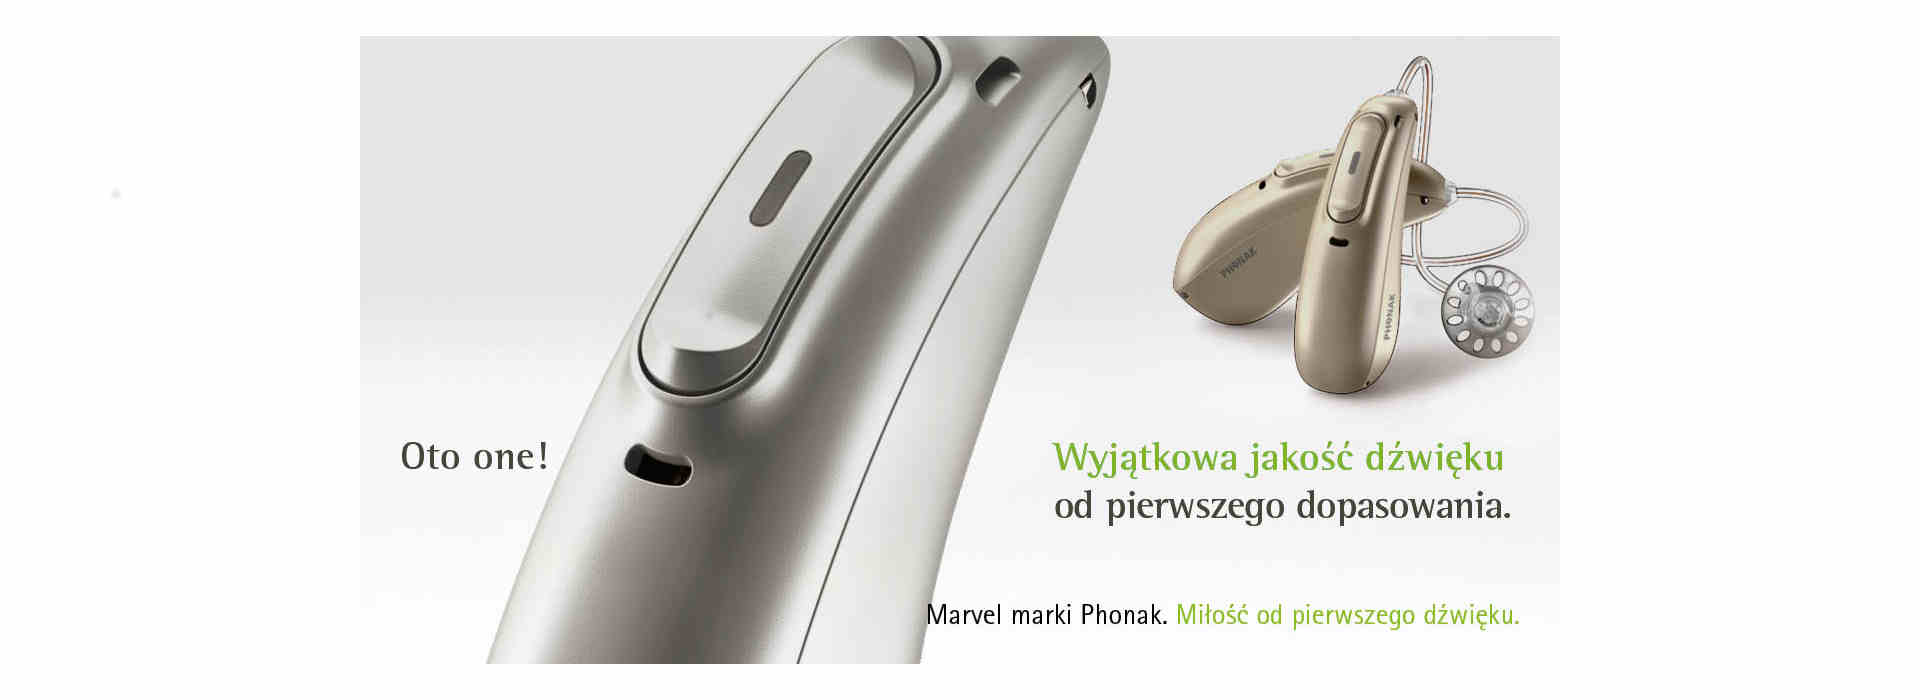 Picture hearing aid Phonak Audeo Marvel 2019 infografika aparaty sluchowe koszalin.pl 1920x700 pixel - Aparaty Słuchowe - Laryngolog | aparaty-sluchowe-koszalin.pl